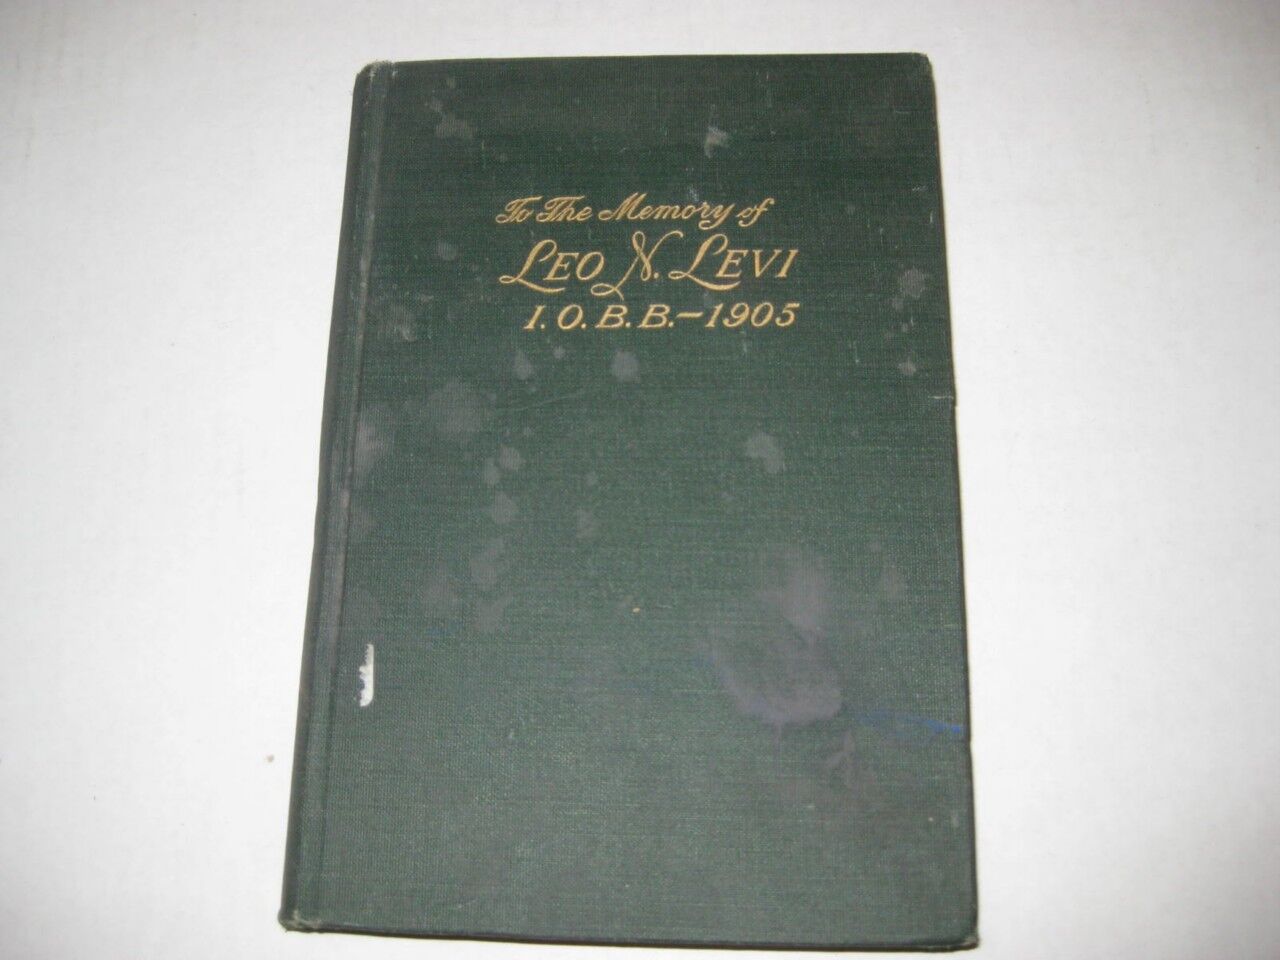 Memorial Volume Leo N. Levi. I.O.B.B. 1905: -1907 JEWISH LEADER AND LAWYER